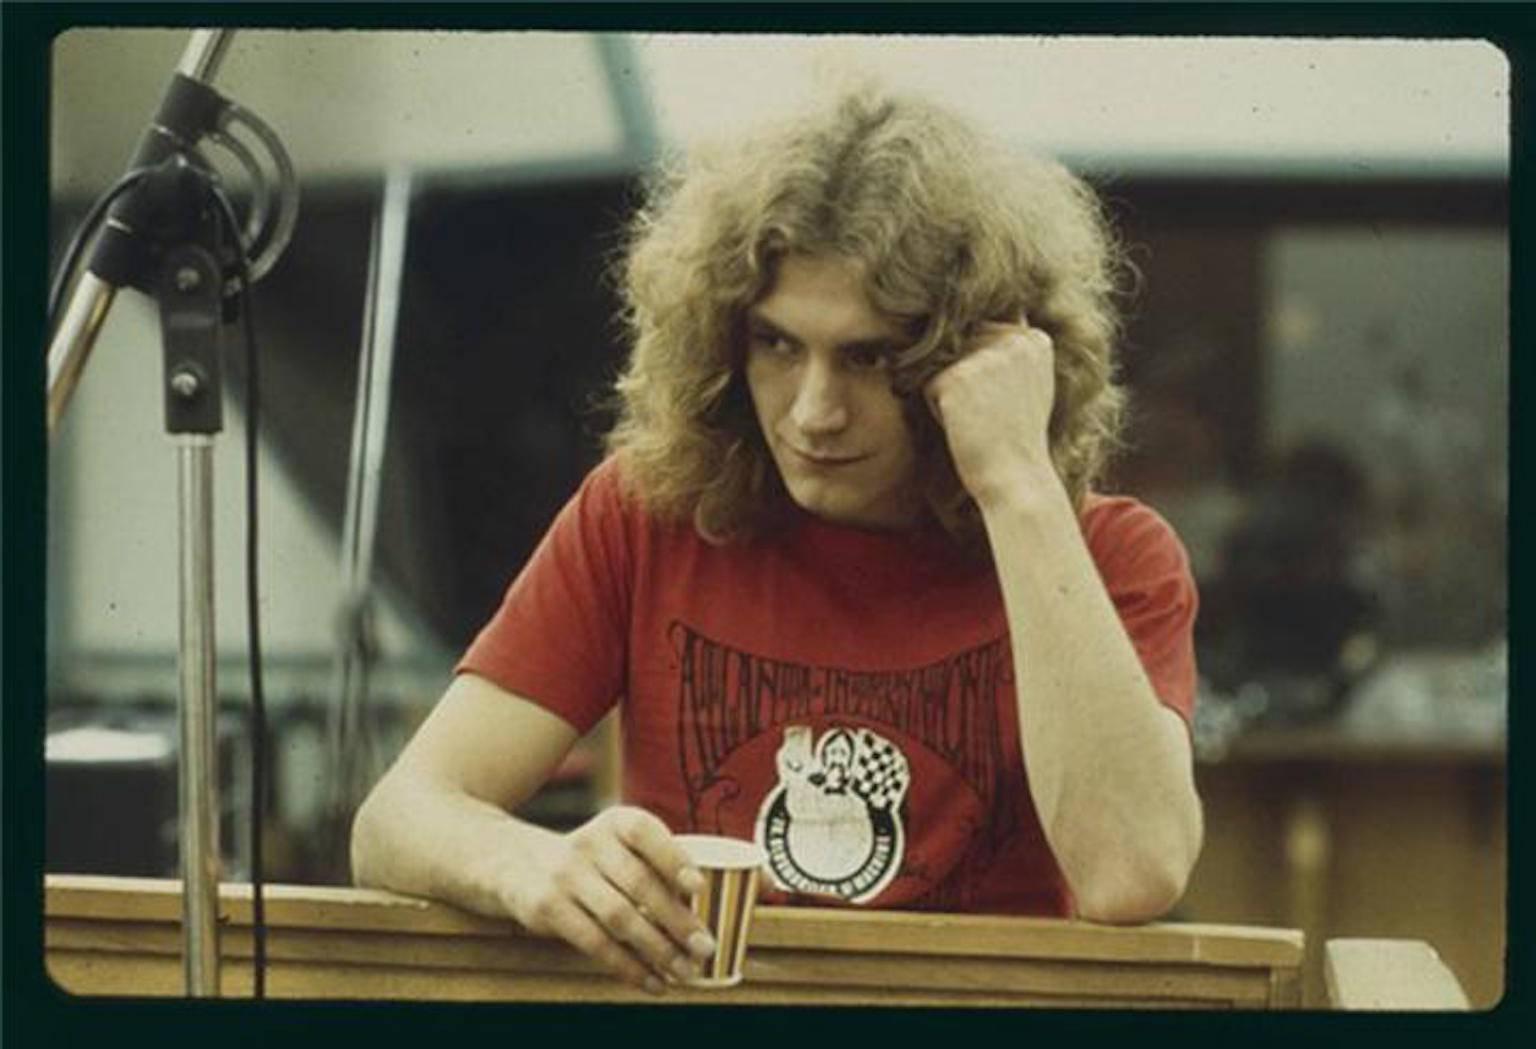 Robert Plant, Led Zeppelin, NYC, 1969 - Photograph by Jim Cummins